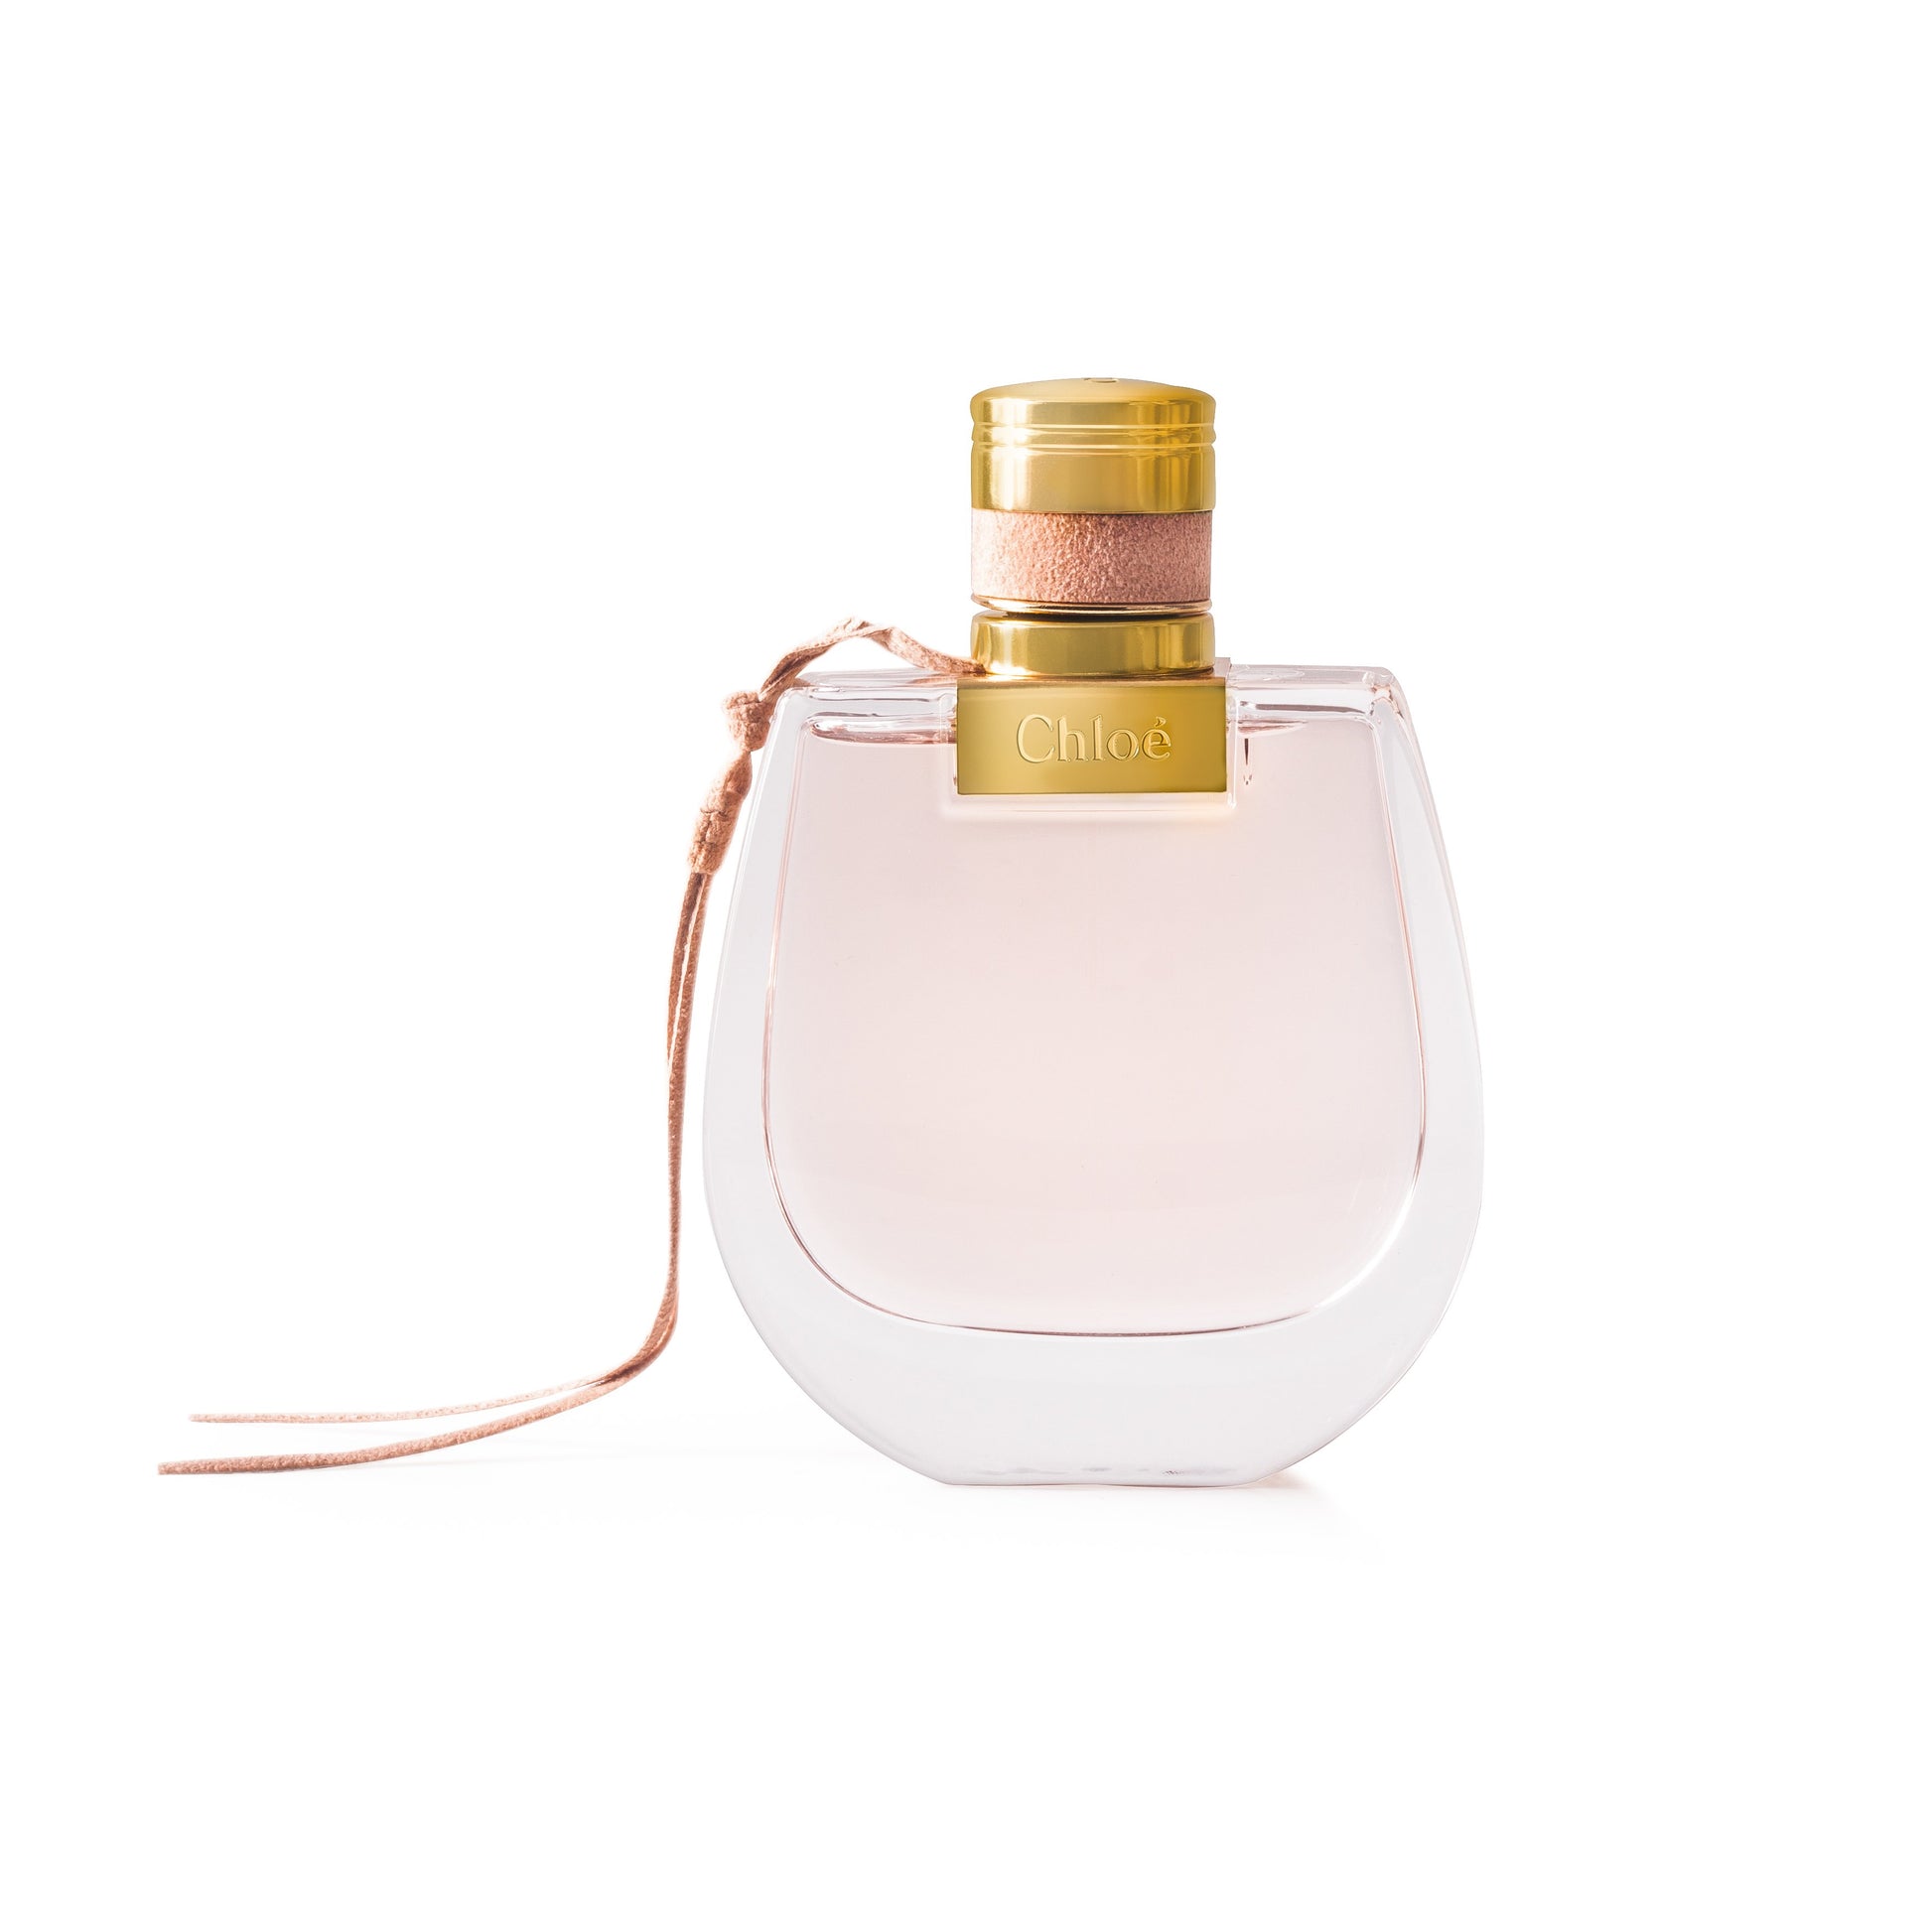 by Spray de for Chloe Fragrance Eau Nomade Women Parfum – Outlet